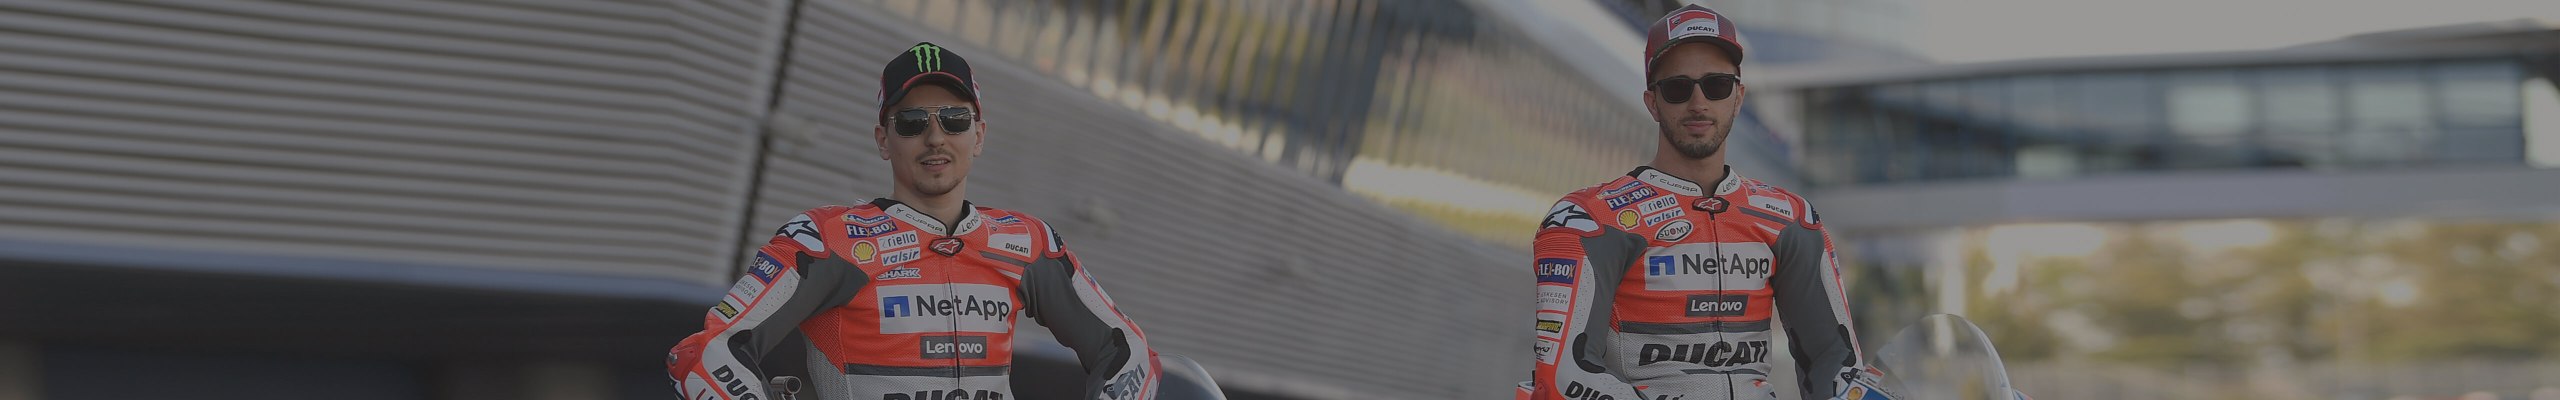 CUPRA, nouveau sponsor de Ducati au Championnat du Monde MotoGP